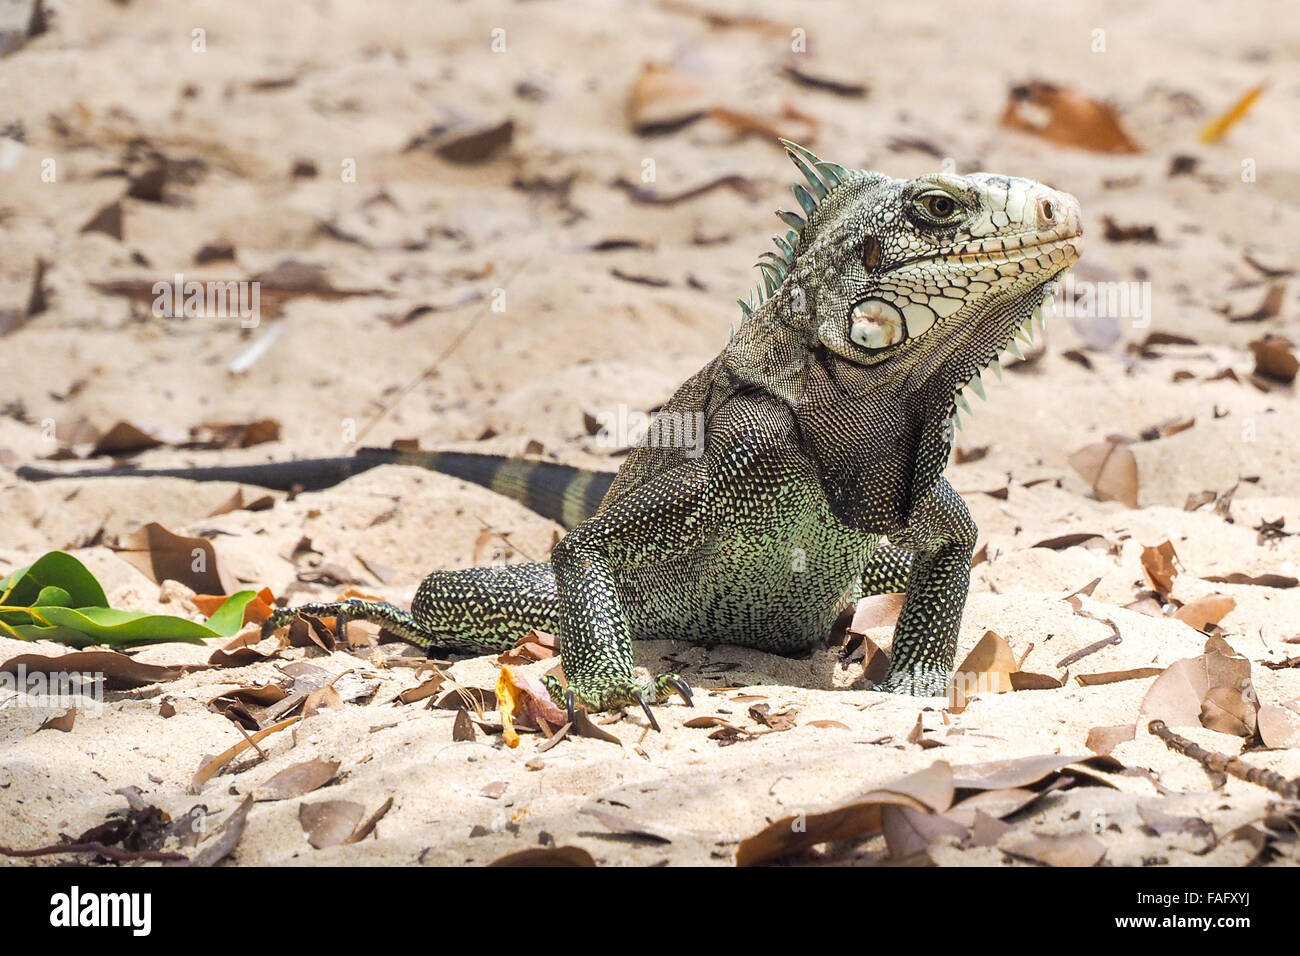 Big example of iguana on a sandy beach Stock Photo